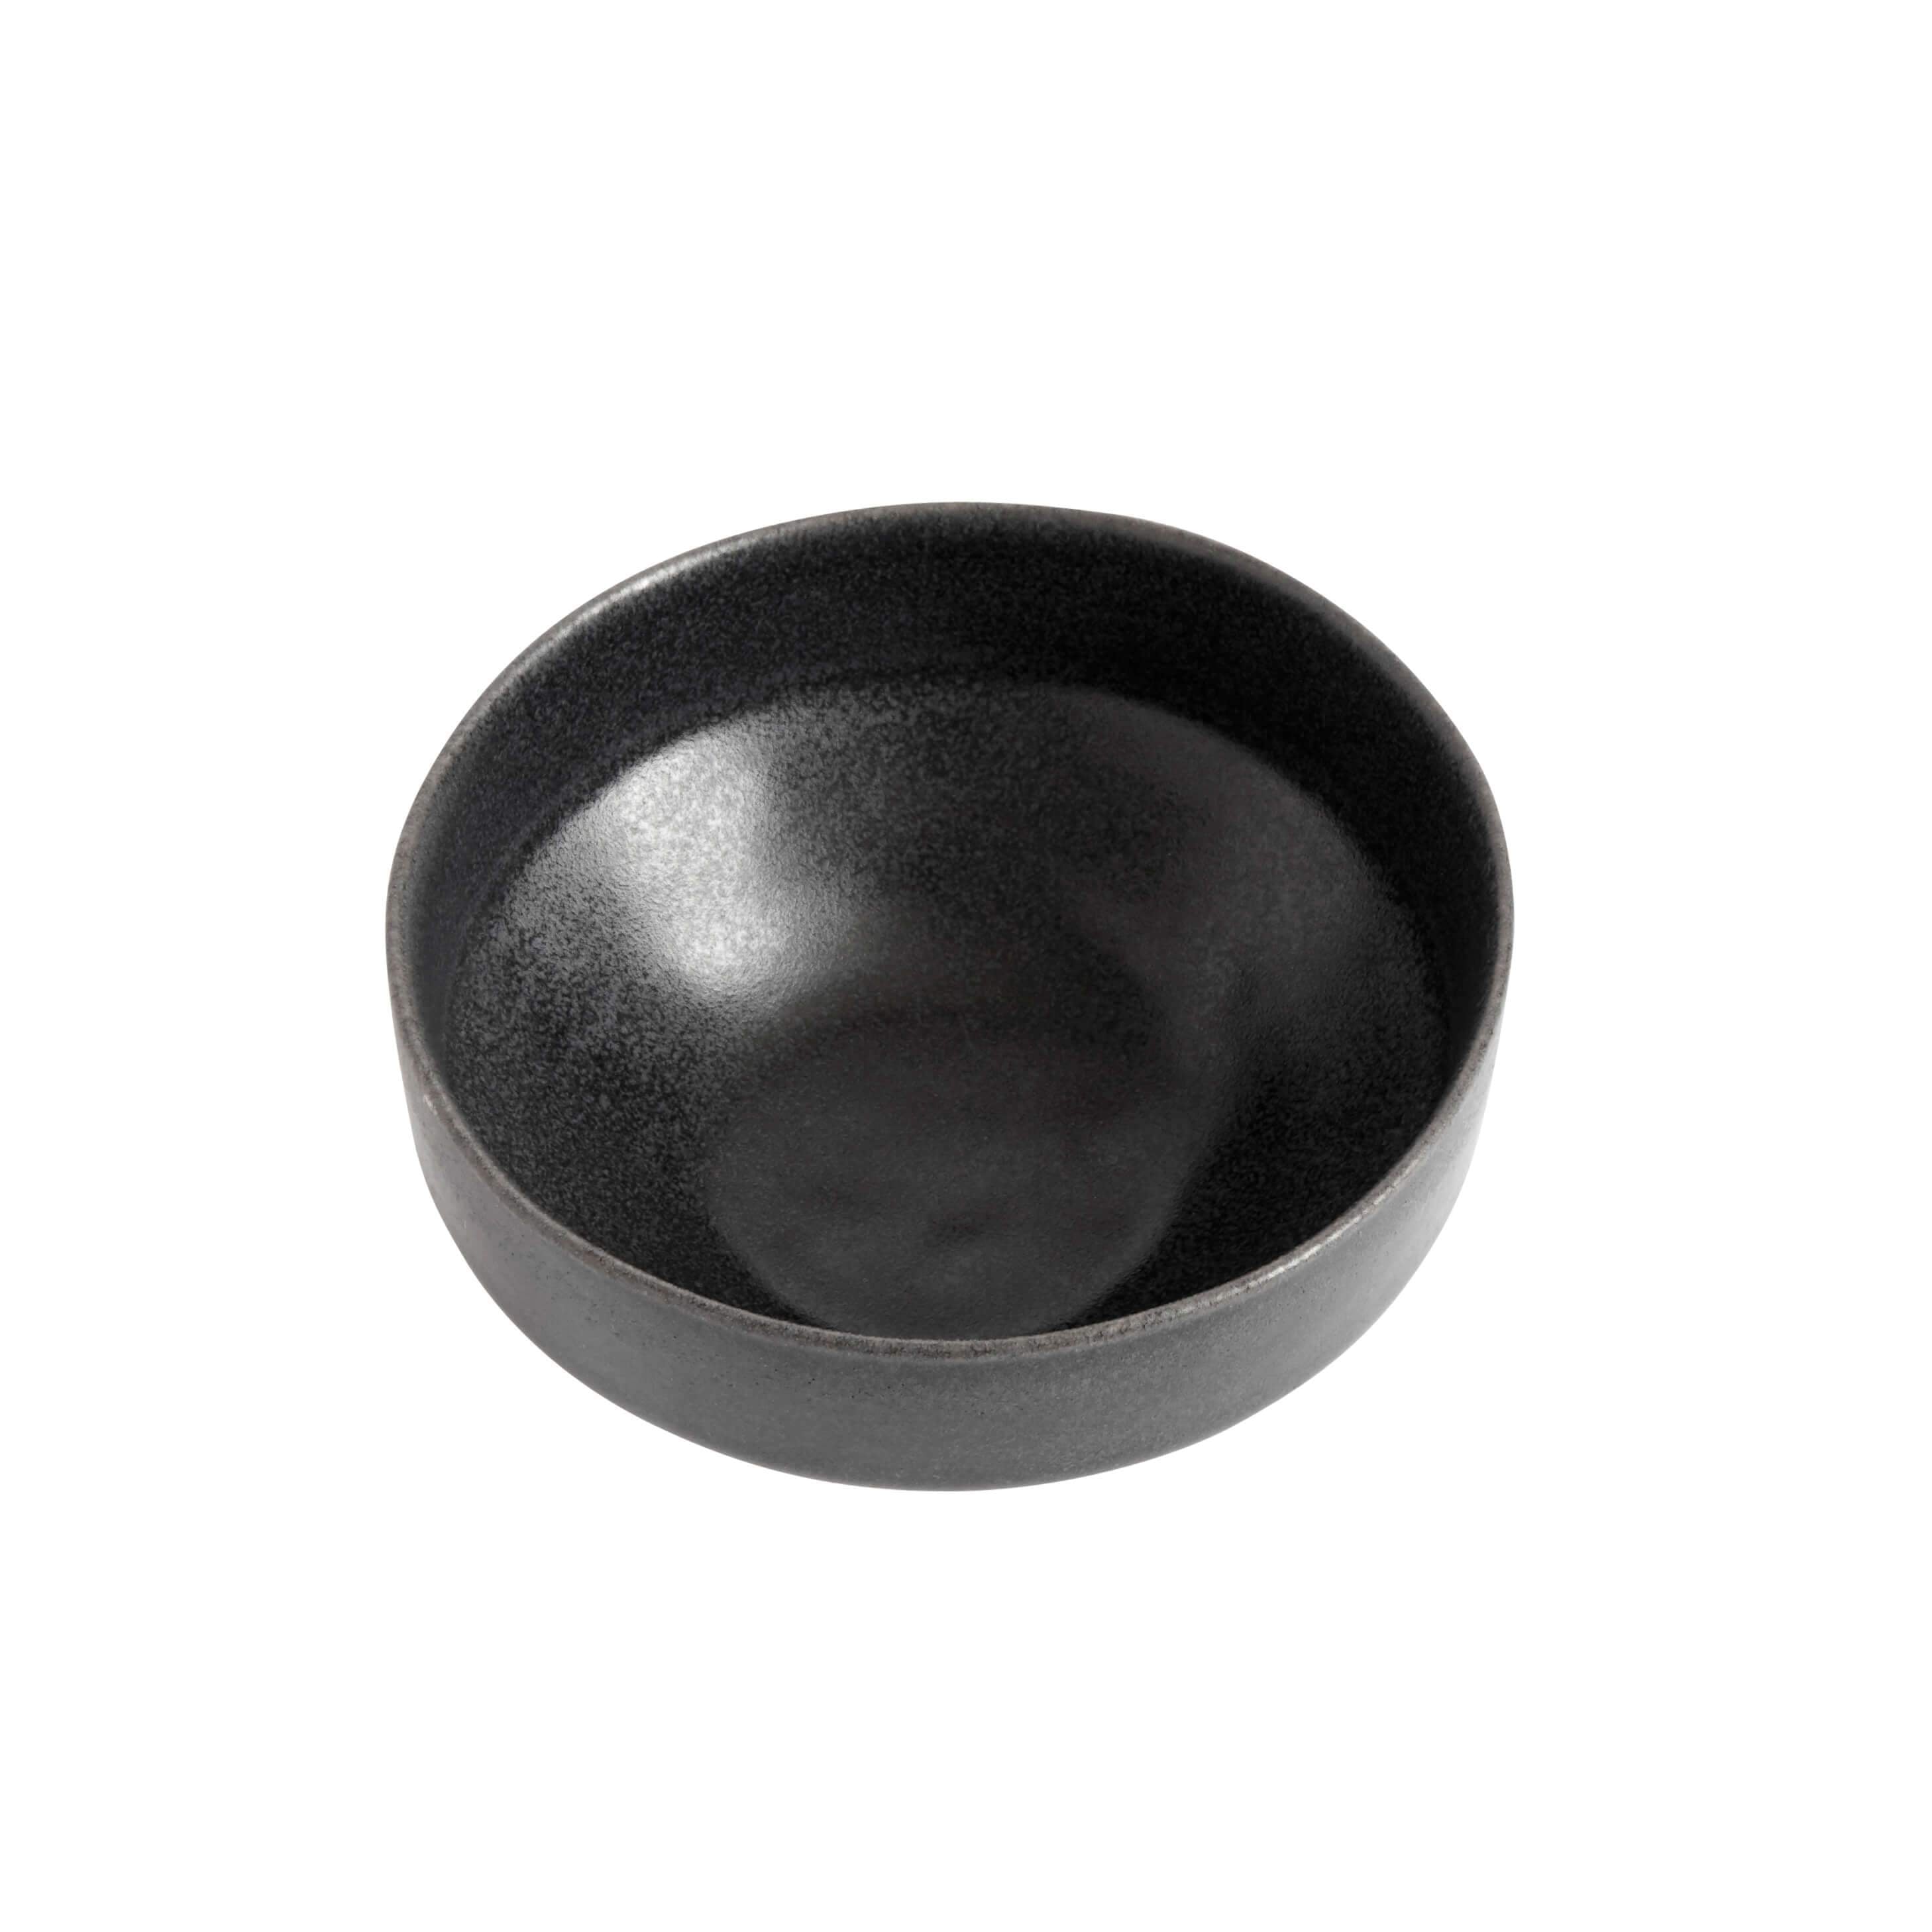 Muubs Ceto Dip-Bowl Black, 11cm